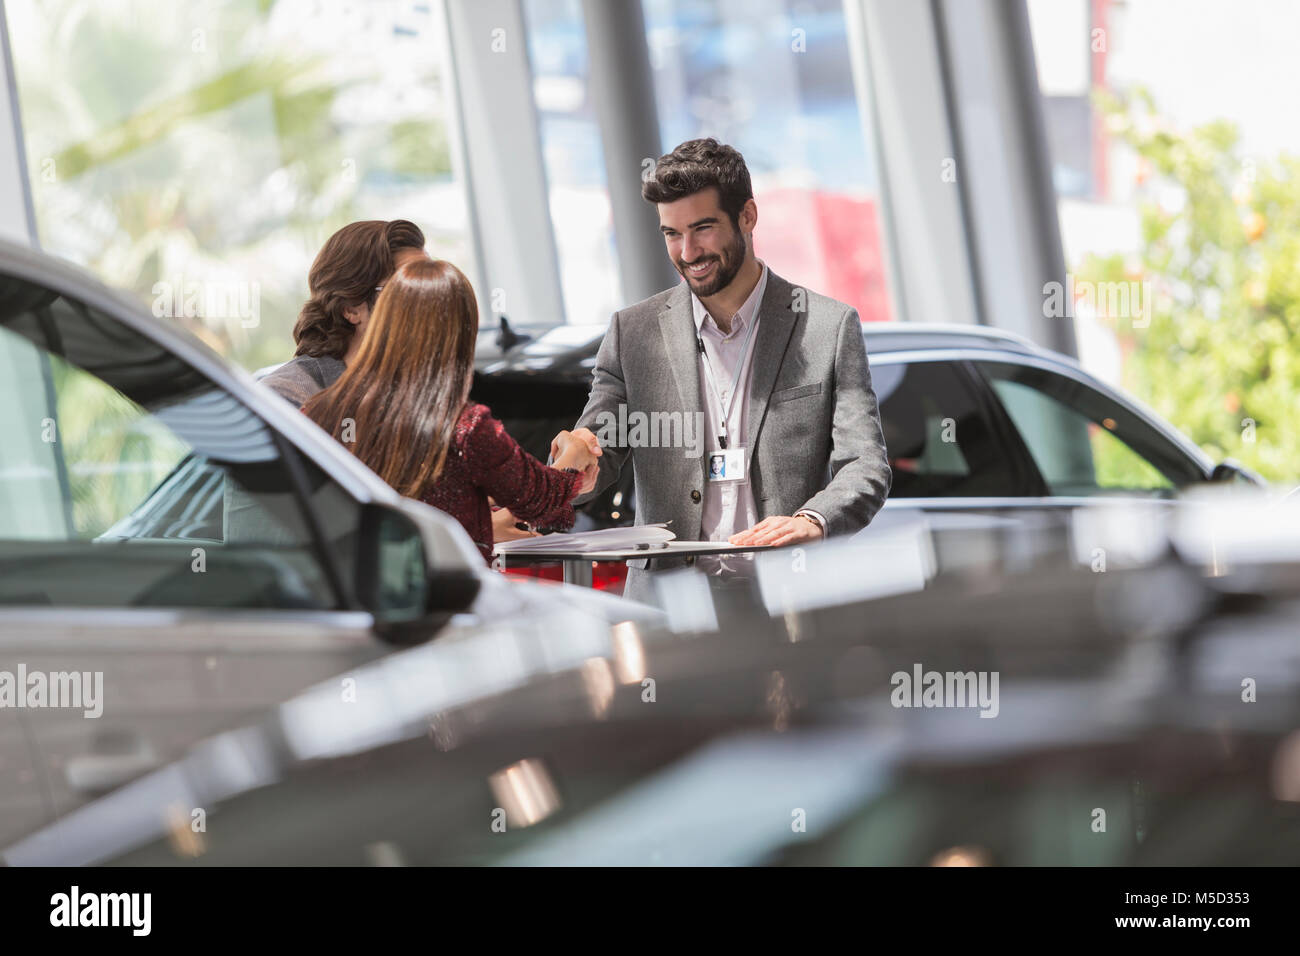 Car salesman handshaking with customers in car dealership showroom Stock Photo